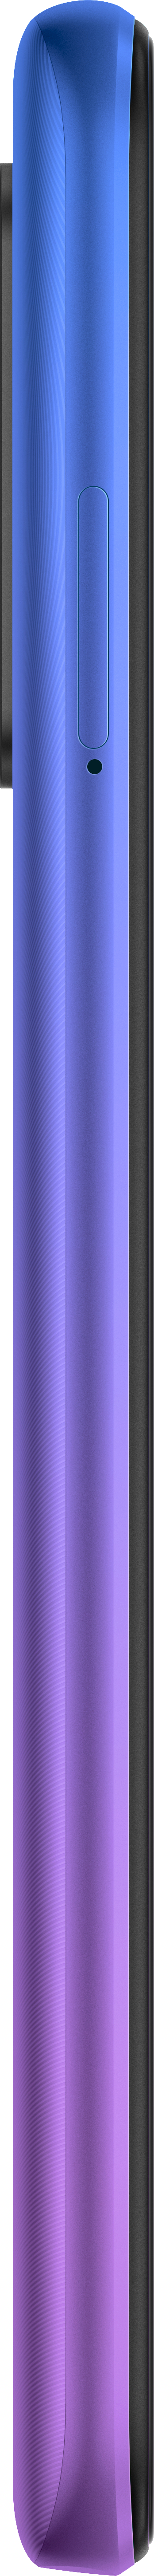 SIM REDMI Sunset Dual 9 GB 64 XIAOMI Purple